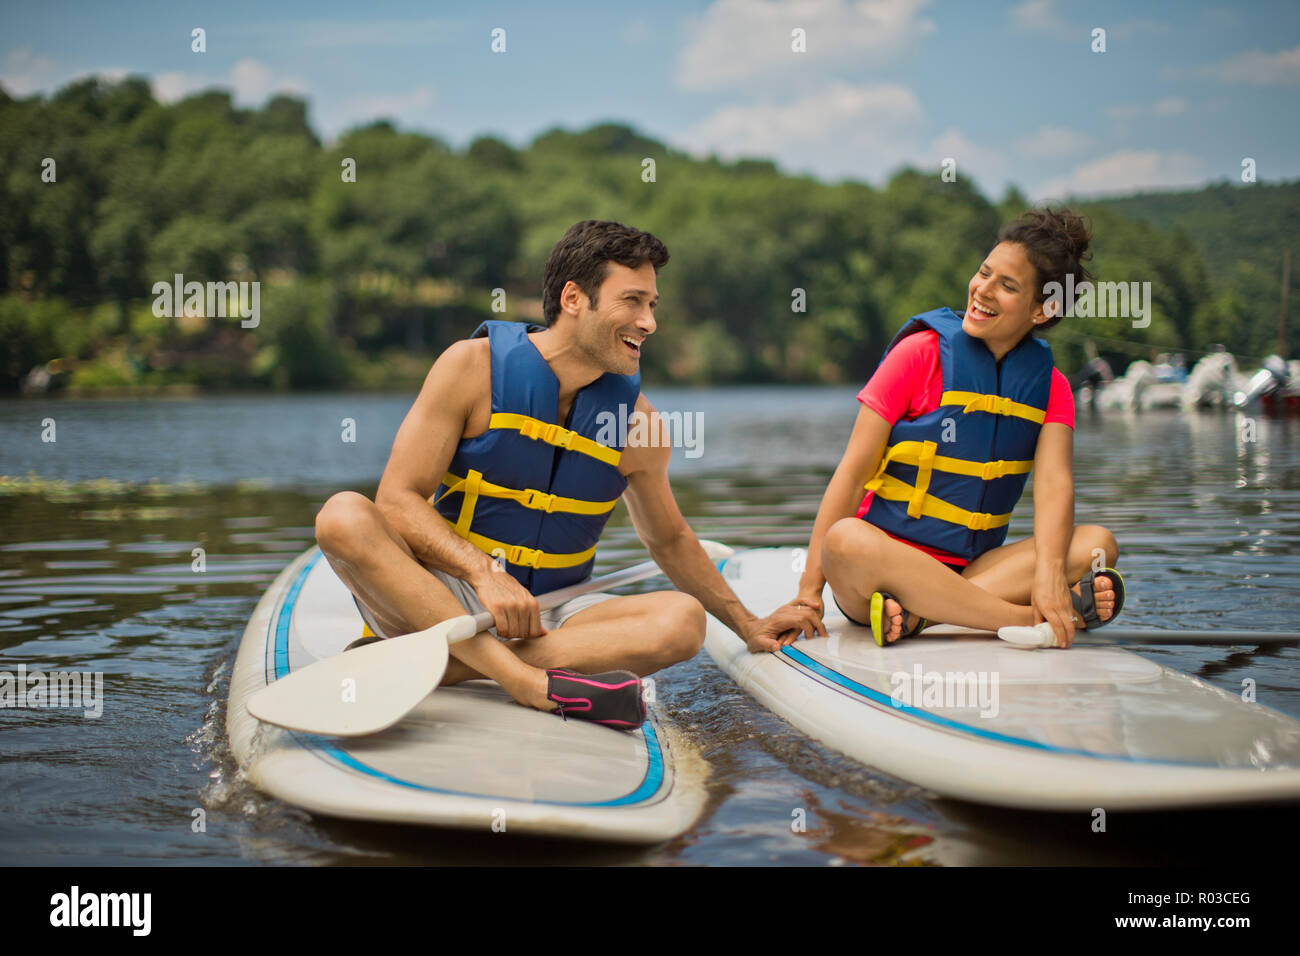 Young couple playfully flirting on paddleboards. Stock Photo